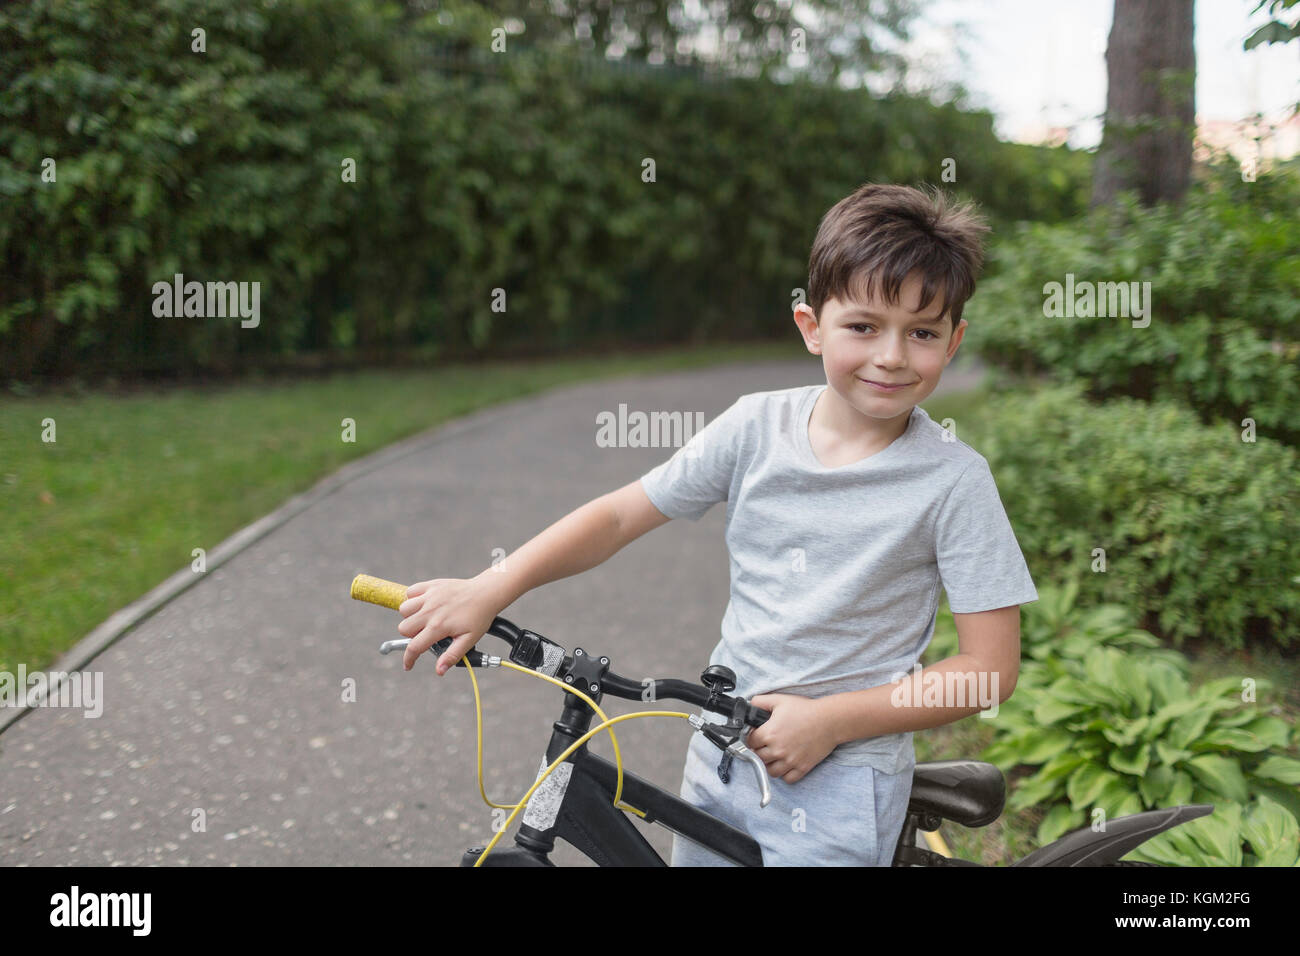 Retrato de niño montando bicicleta en calle contra plantas Foto de stock